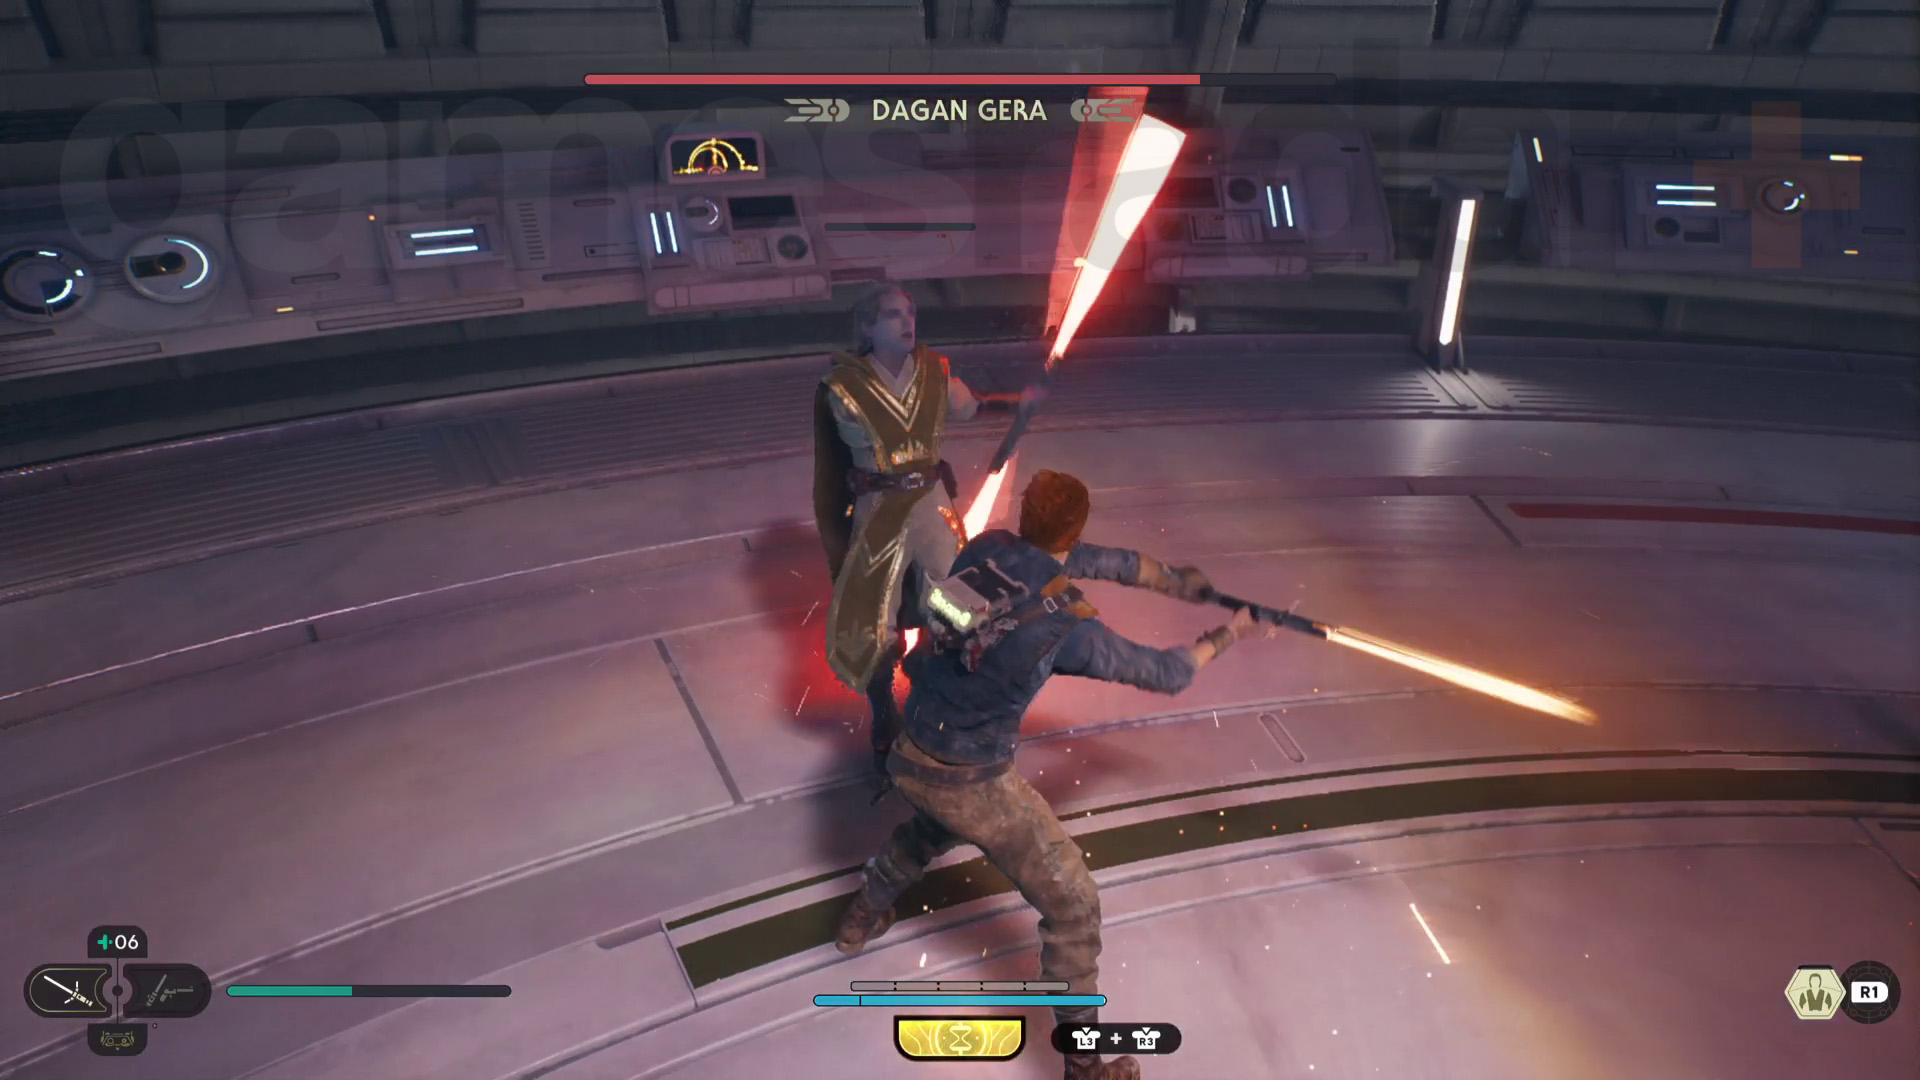 Star Wars Jedi Survivor Koboh observatorio walkthrough Cal luchando contra Dagan Gera